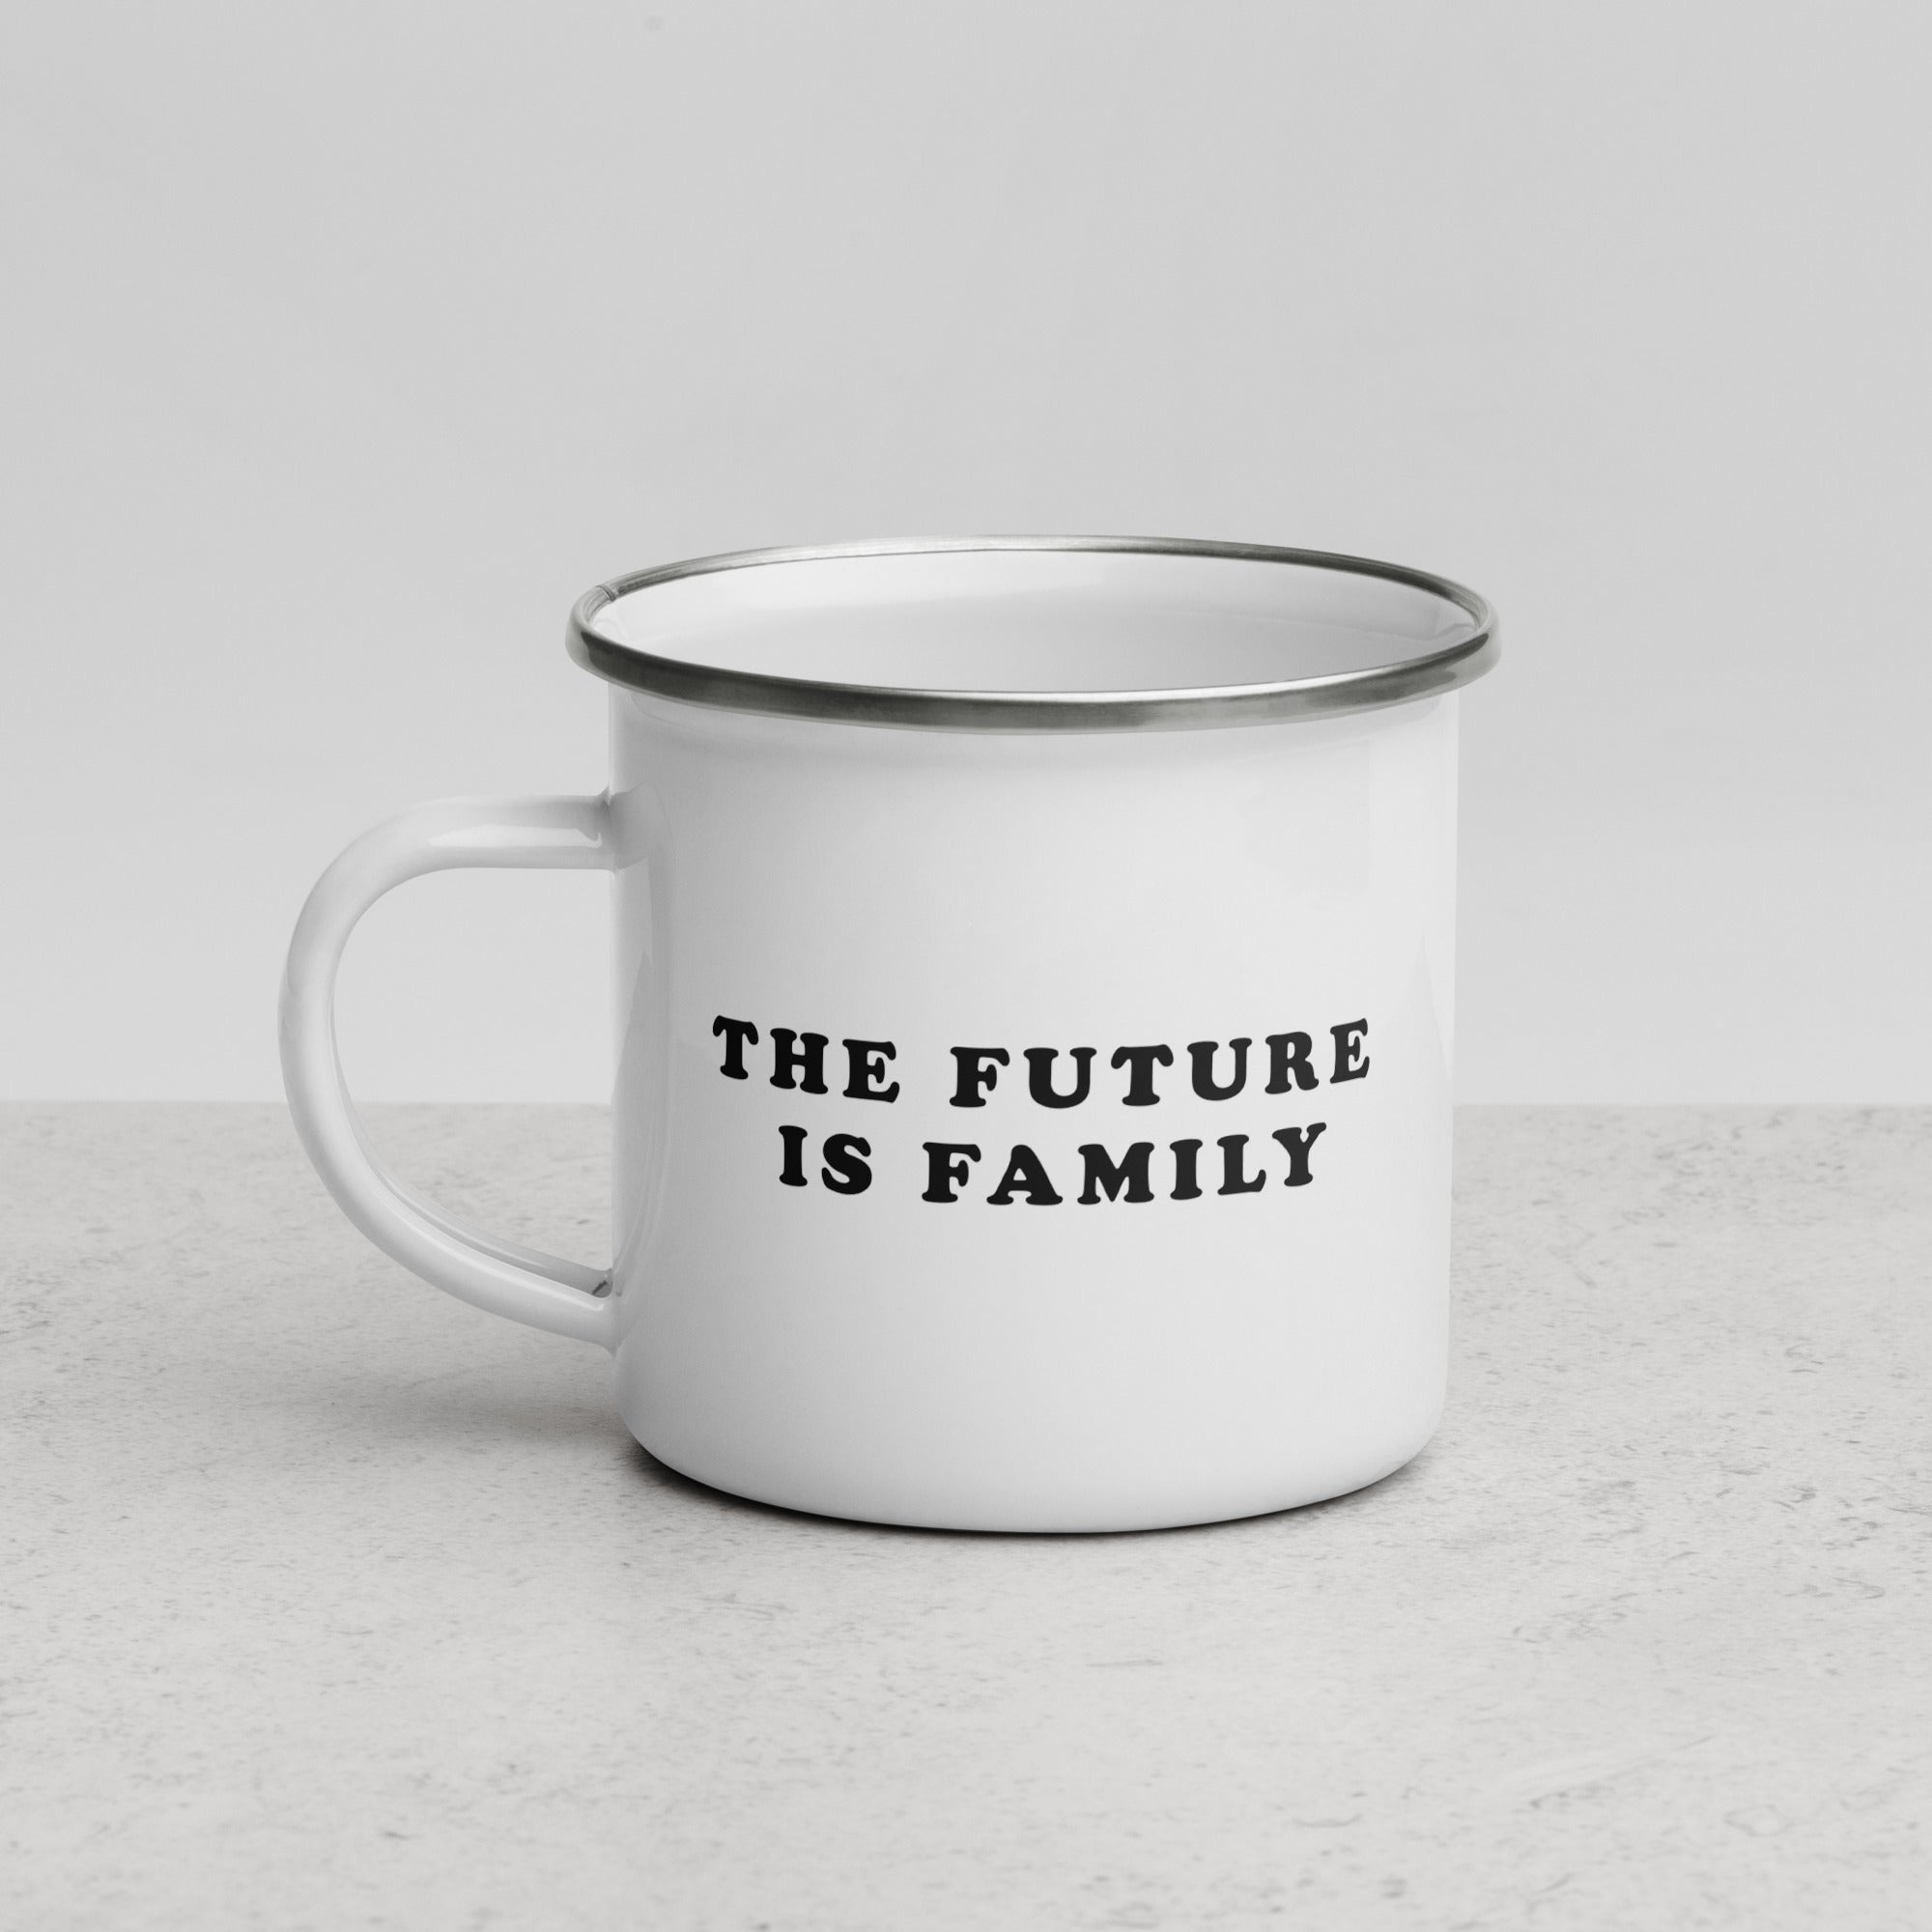 The Future Is Family Enamel Camping Mug 12oz